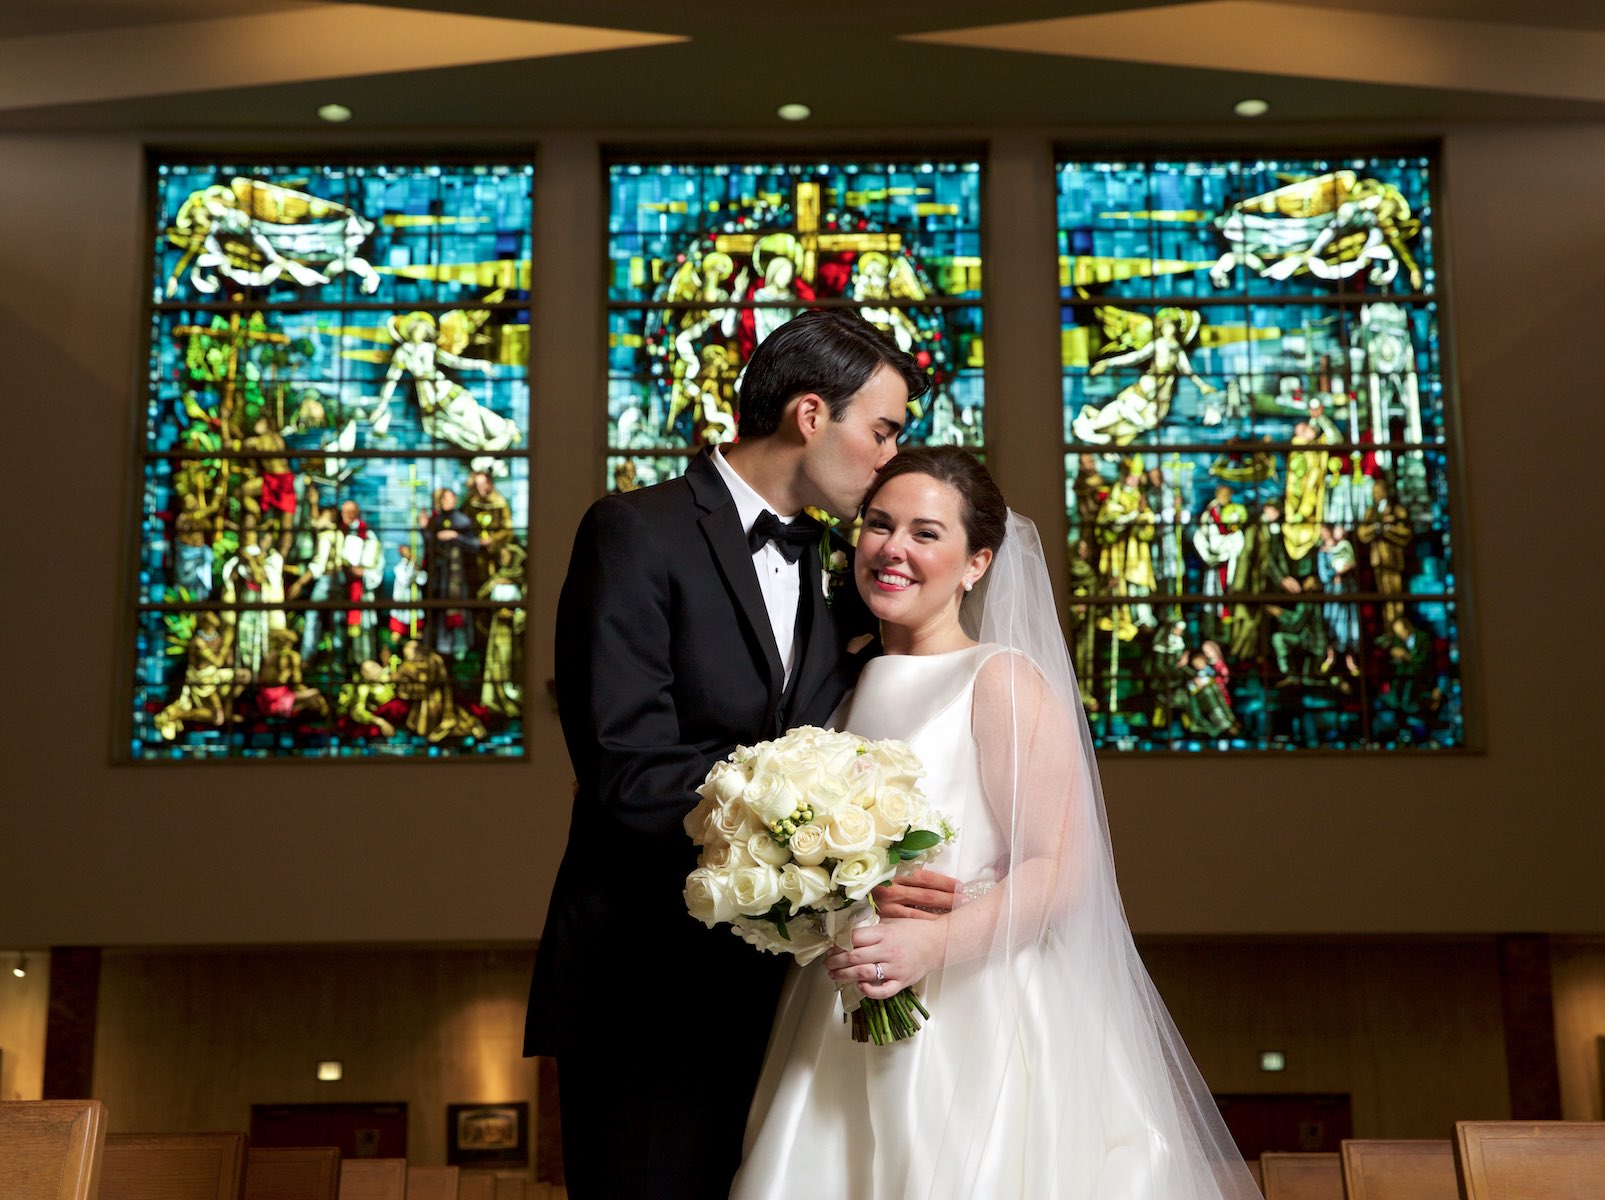 Elizabeth & Daniel wedding portraits, featuring the stained glass windows at St. Rita of Cascia Shrine Chapel in Chicago. Wedding photography by Steve & Tiffany Warmowski